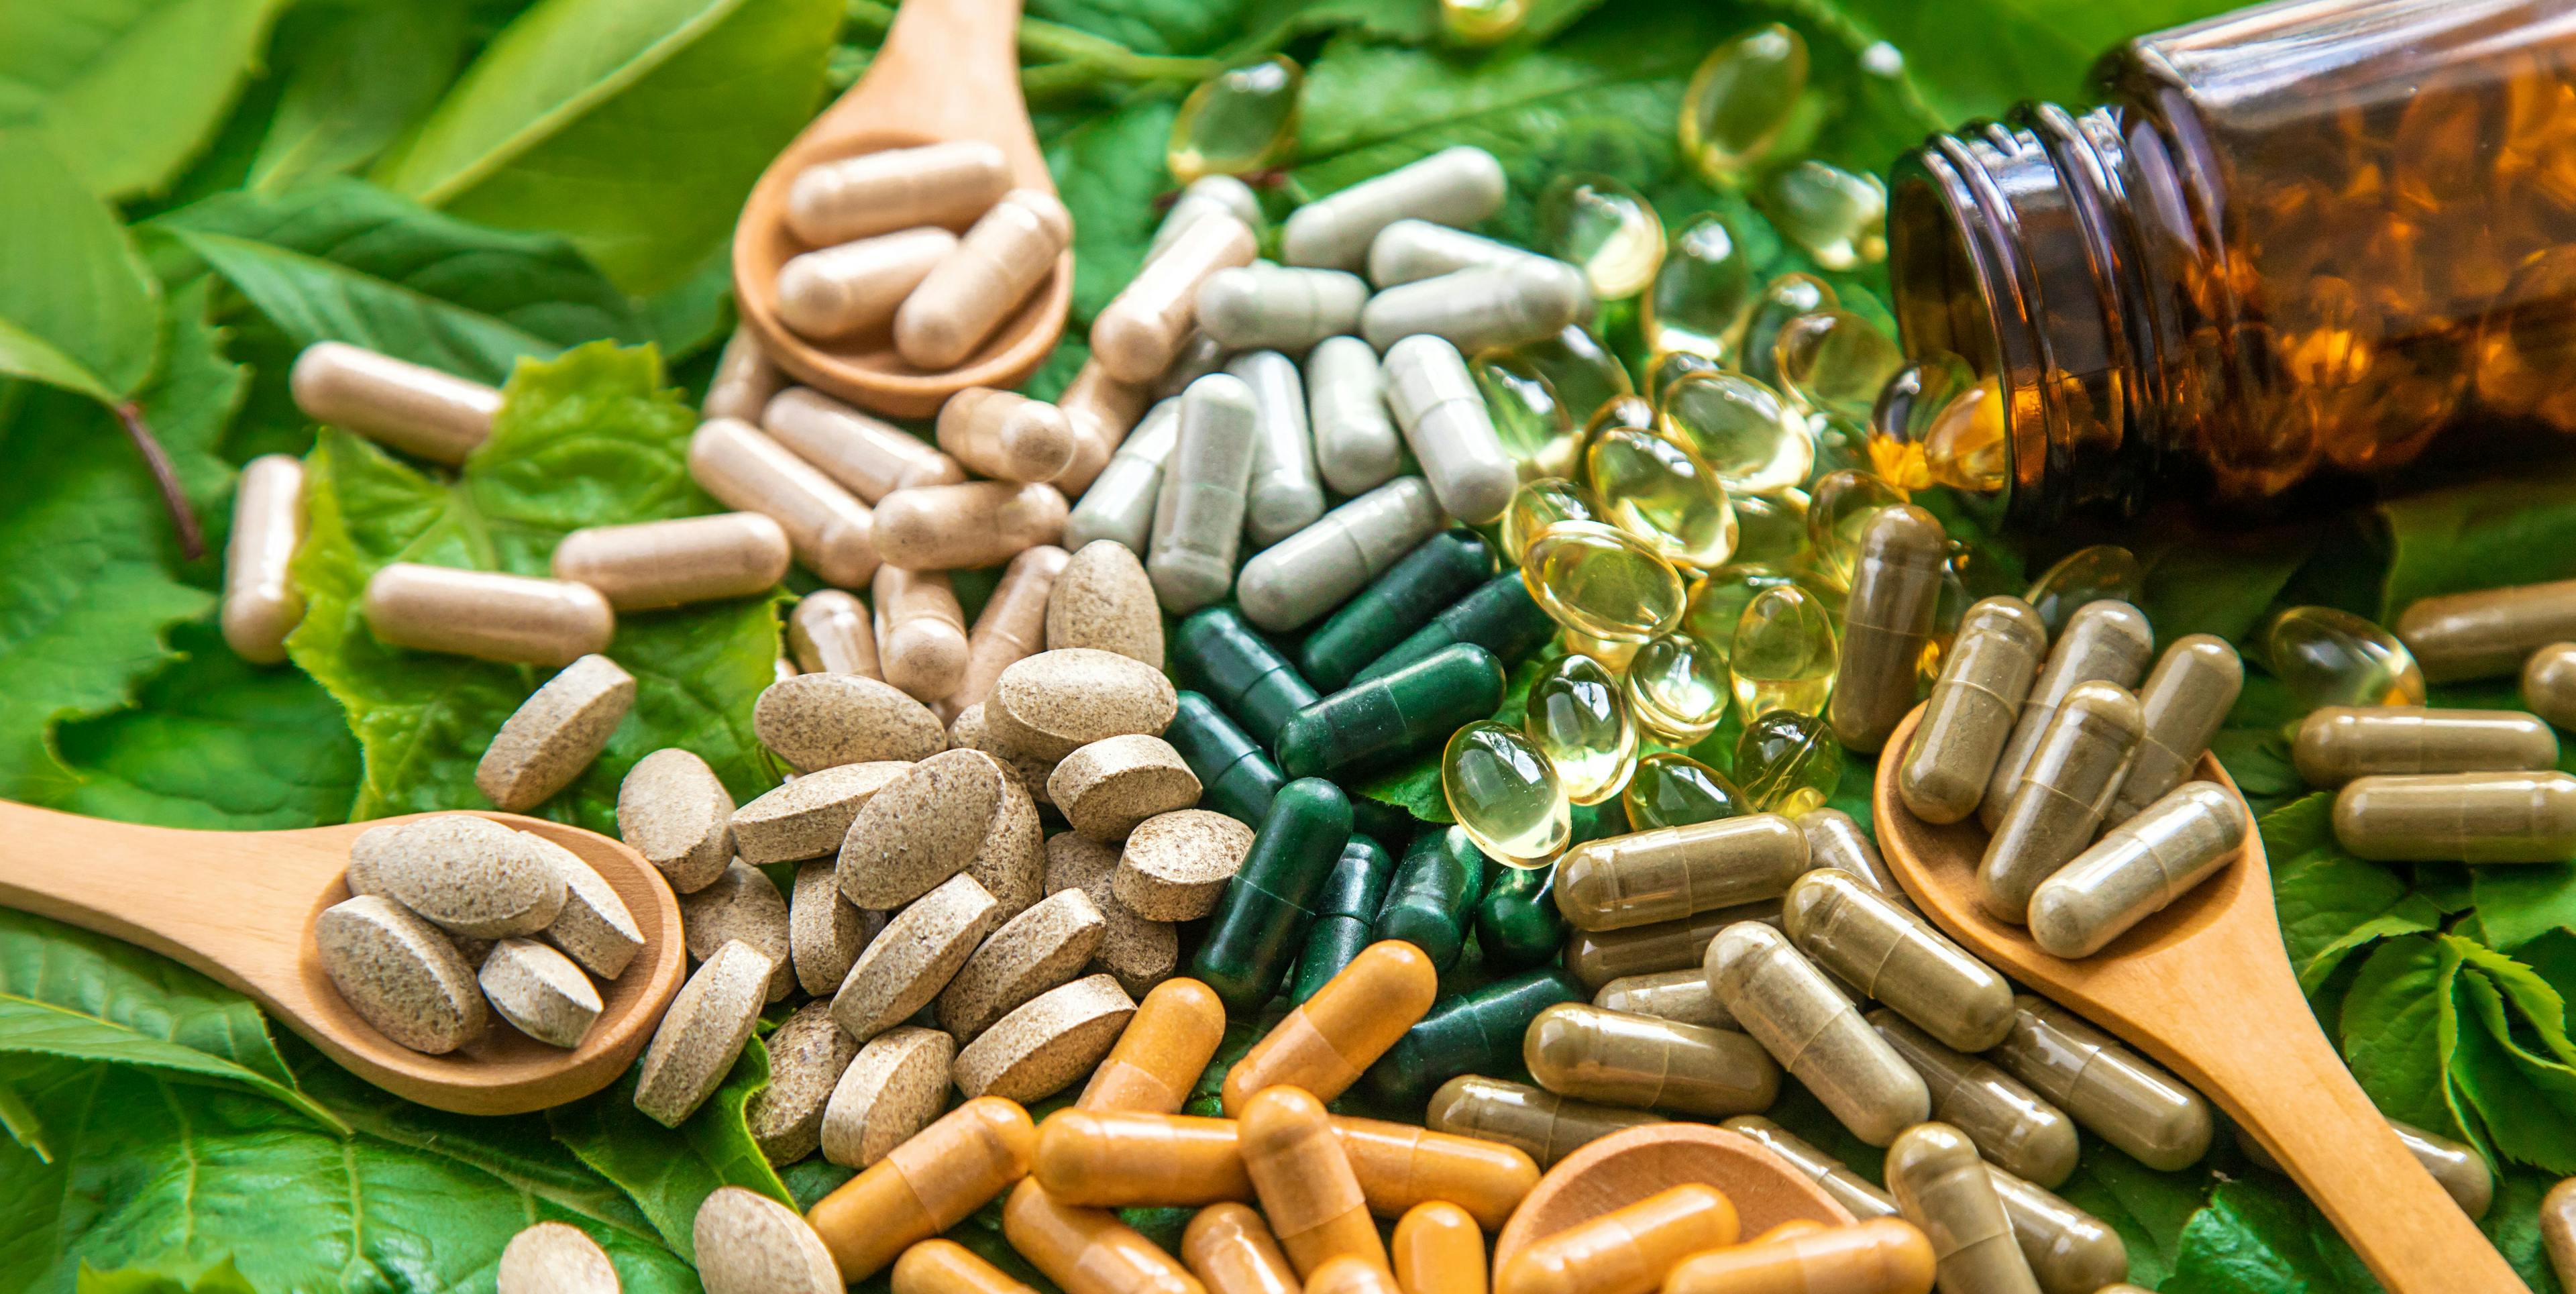 Capsules herb supplements on green leaves background. Selective focus - Image credit: yanadjan | stock.adobe.com 